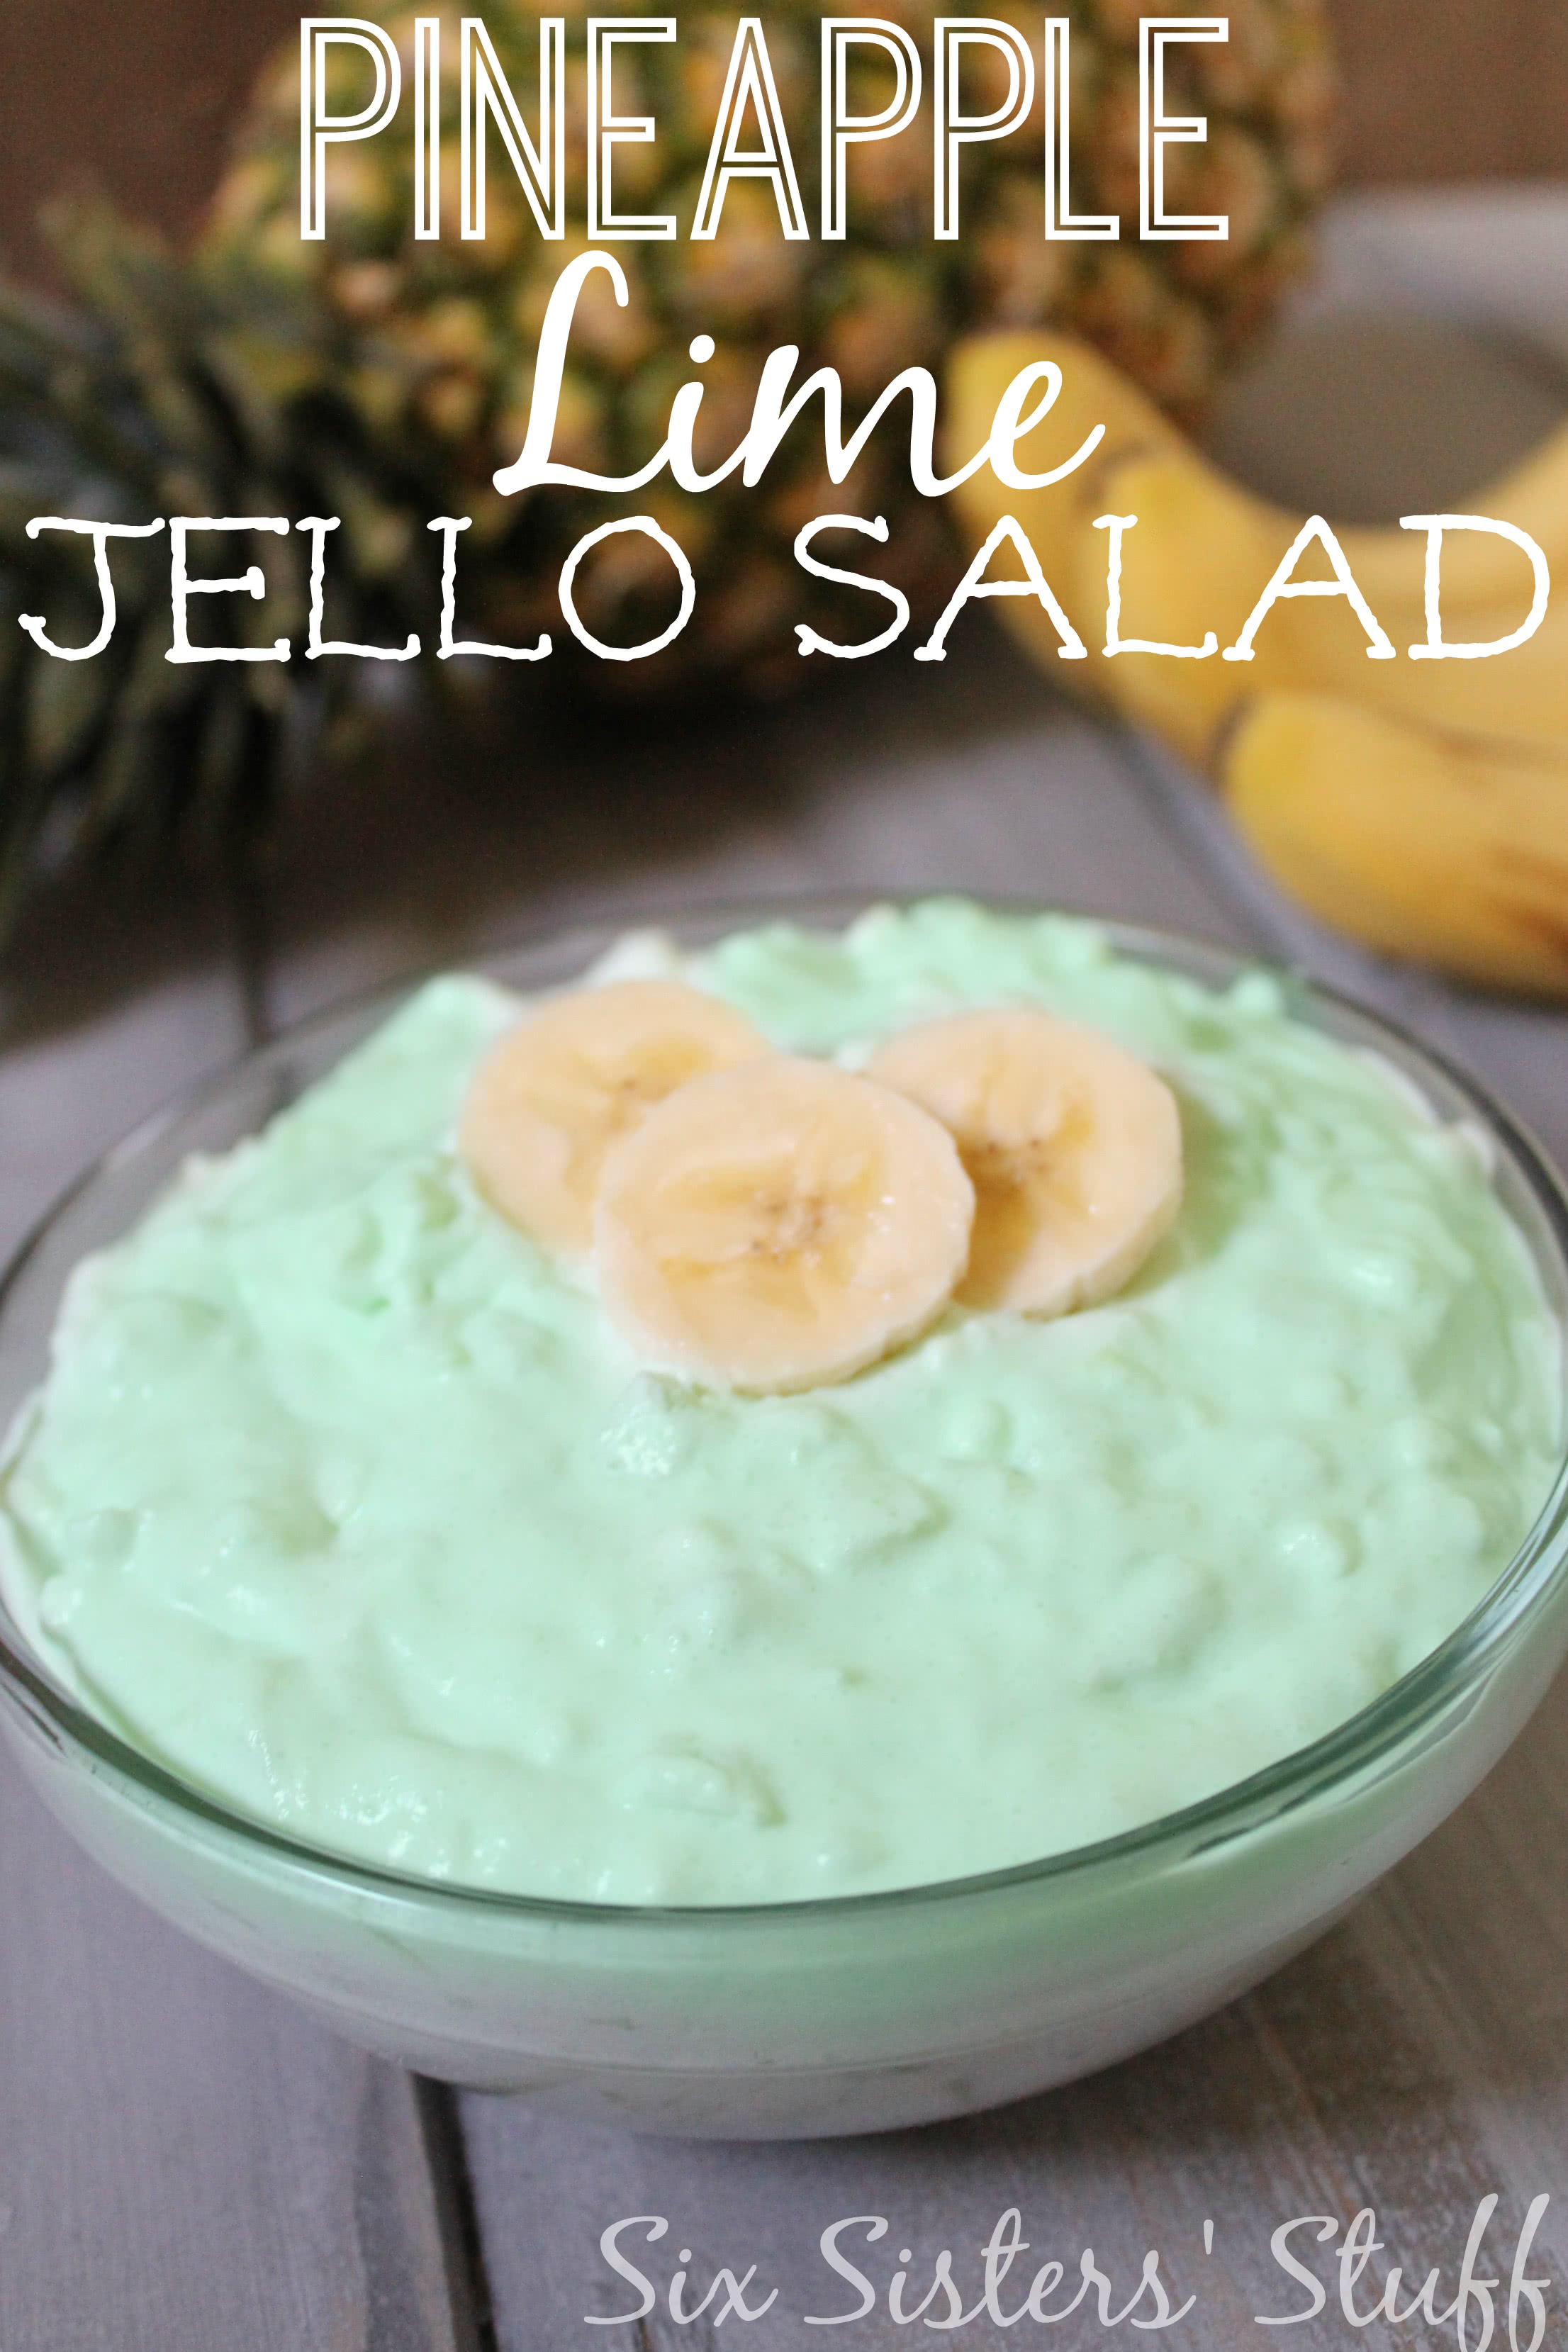 Pineapple Lime Jello Salad